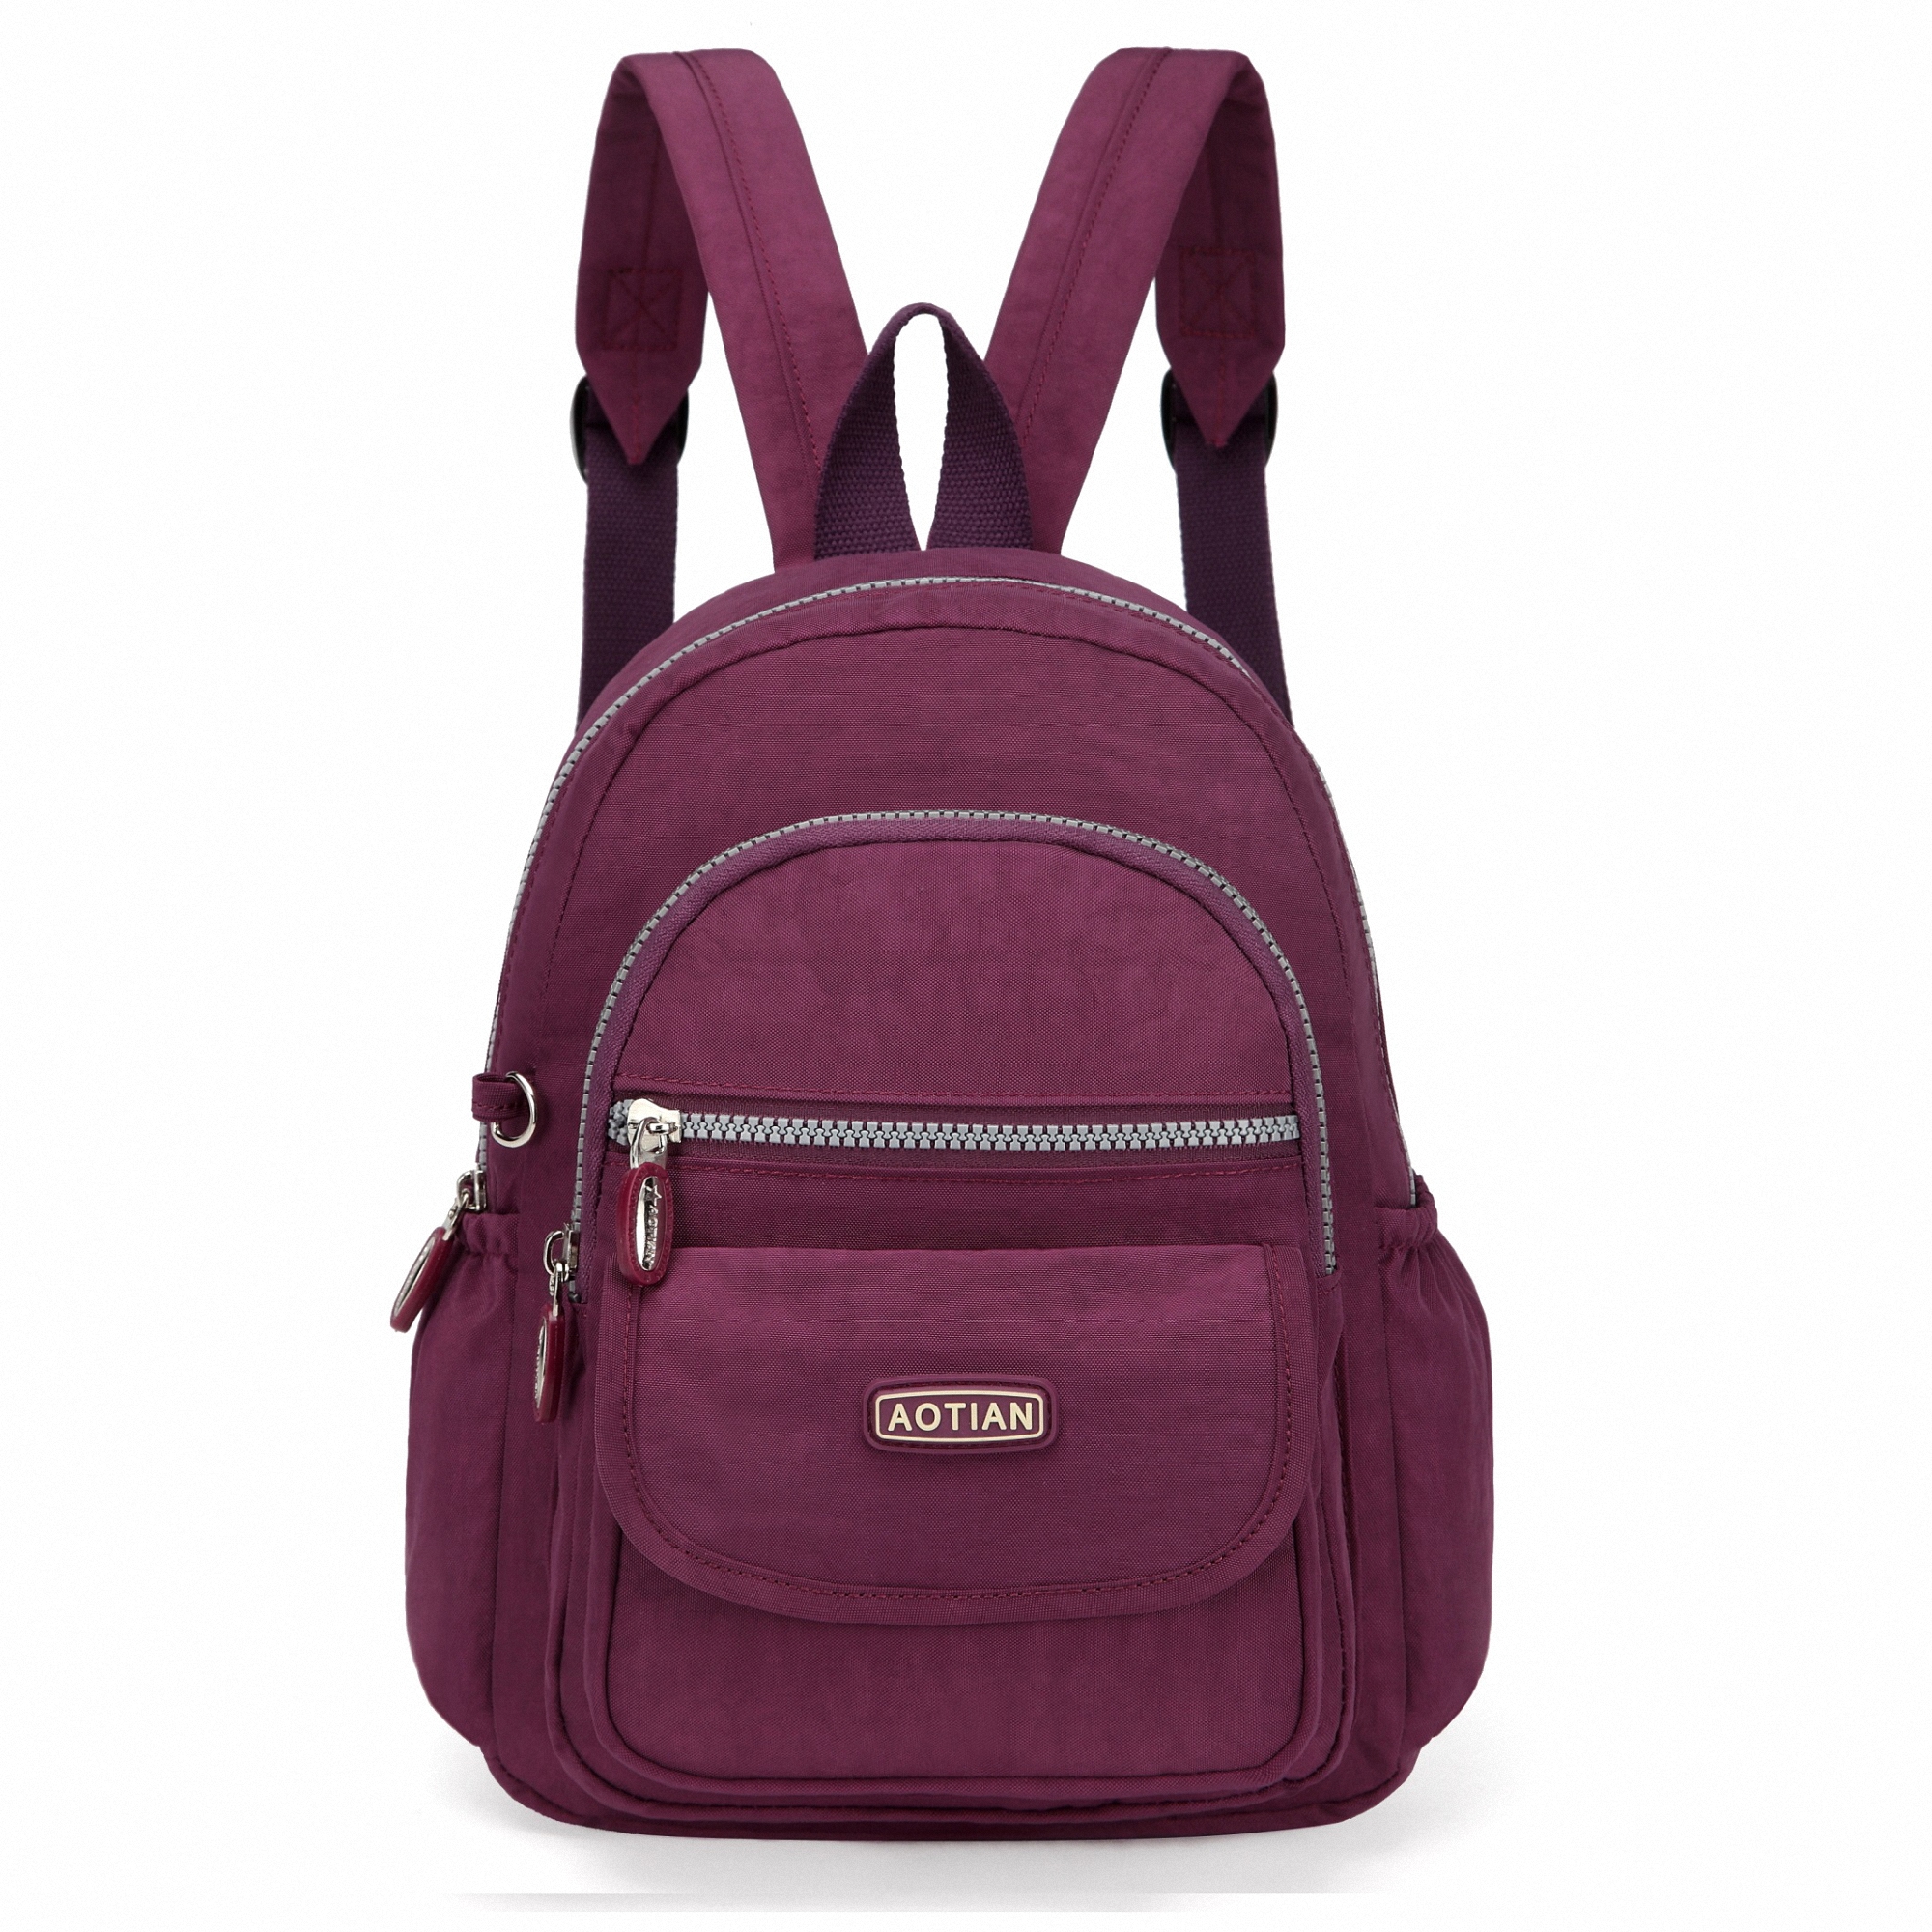 AOTIAN Mini Nylon Women Backpacks Casual Lightweight Small Daypack for Girls Purple - image 1 of 7